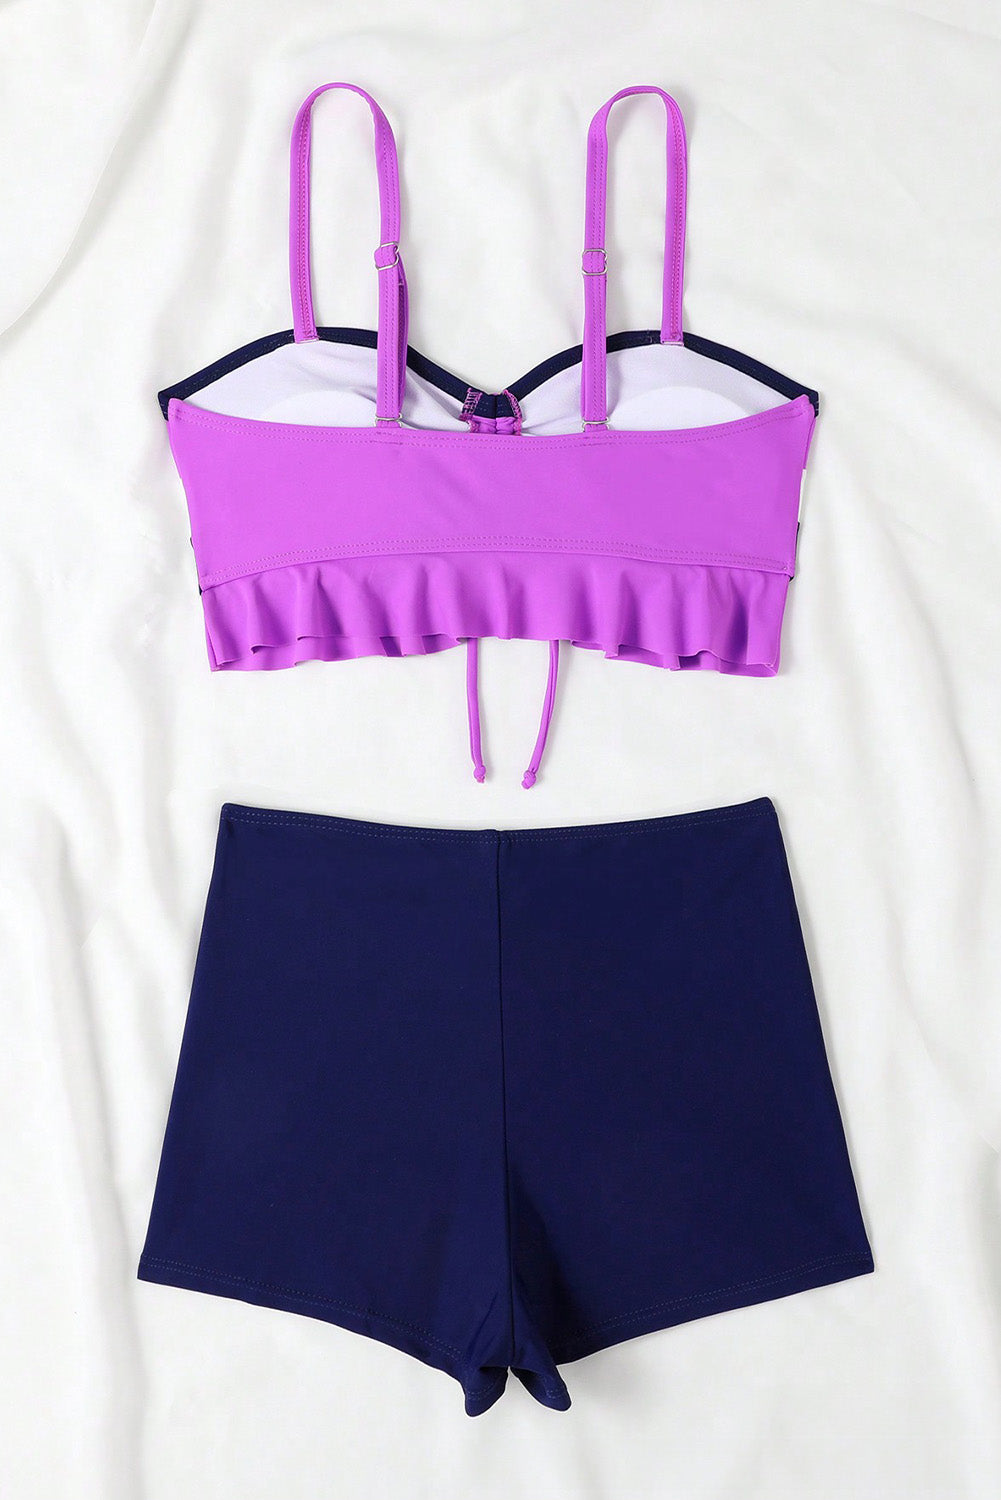 Dark Purple Colorblock Ruffled Drawstring Tie Shorts Bikini